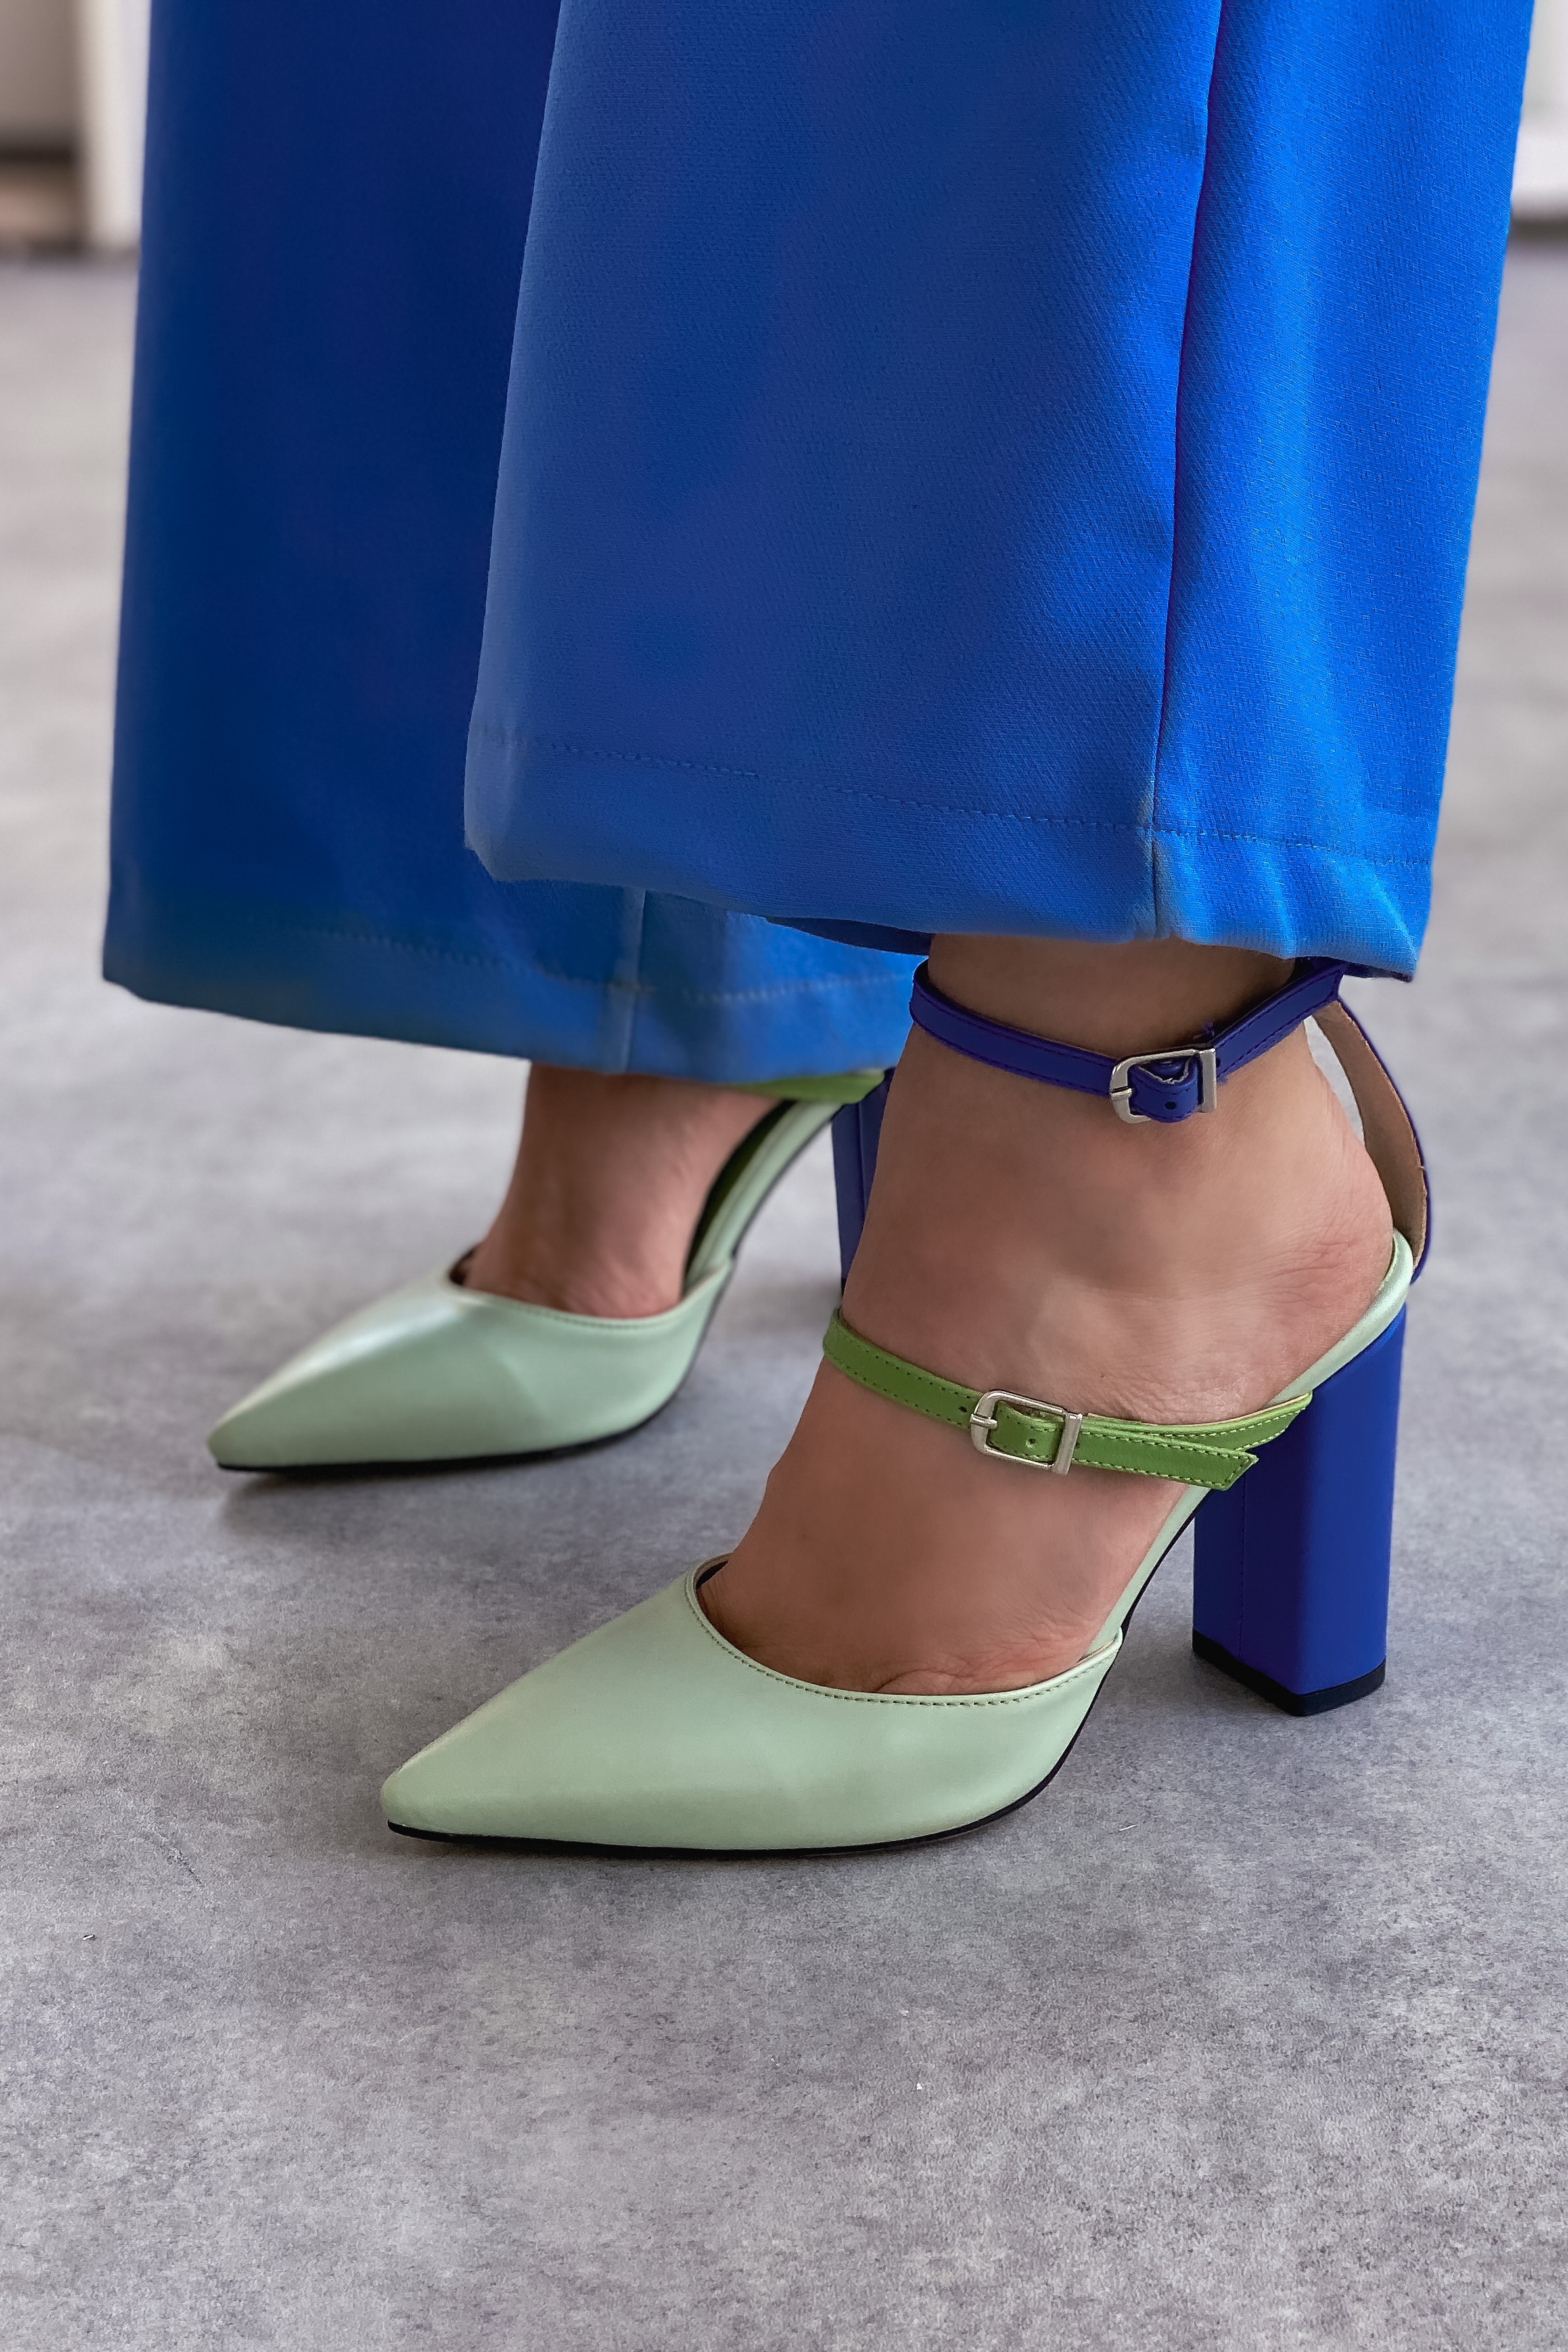 Olenpa matte leather high heeled shoes green